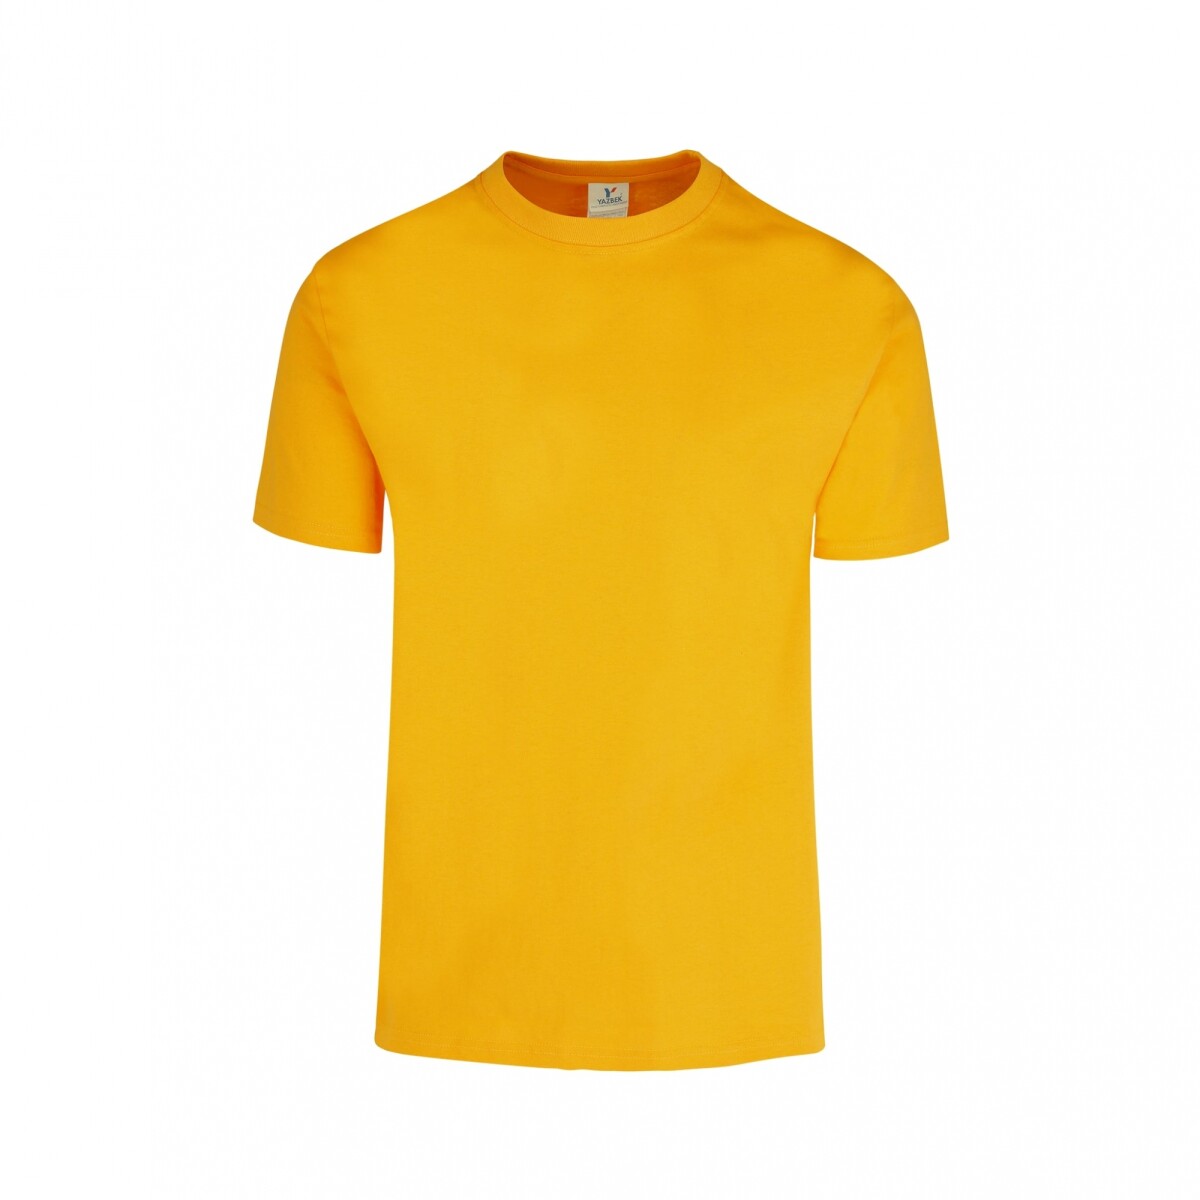 Camiseta a la base peso completo - Mango 